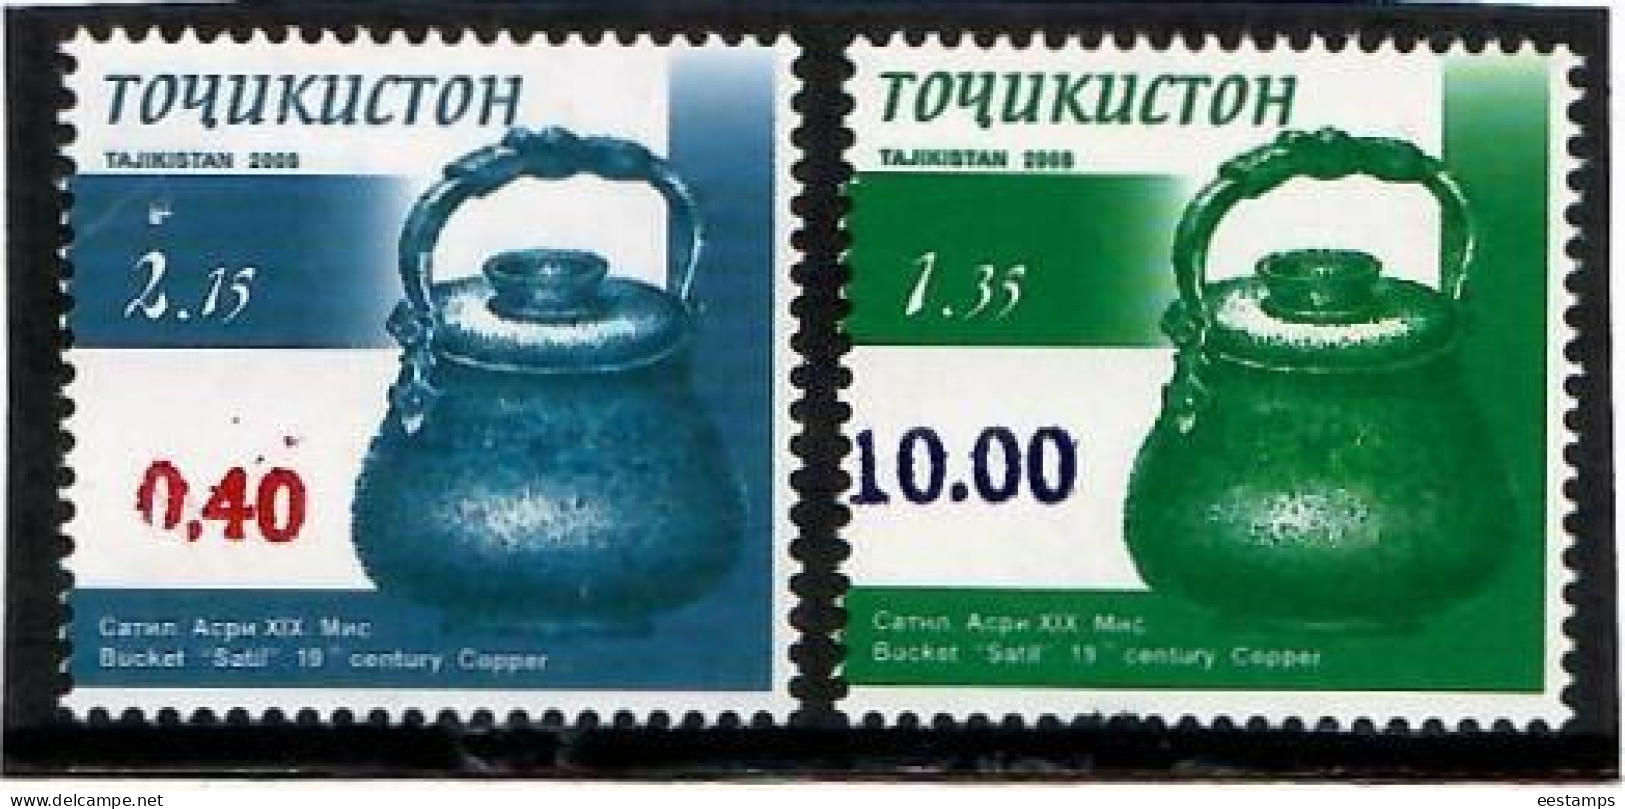 Tajikistan 2021 . Ovpt 0.40, 10.00 On Cooking Copper Of 2008 (Trial Stamps) . 2 - Tajikistan